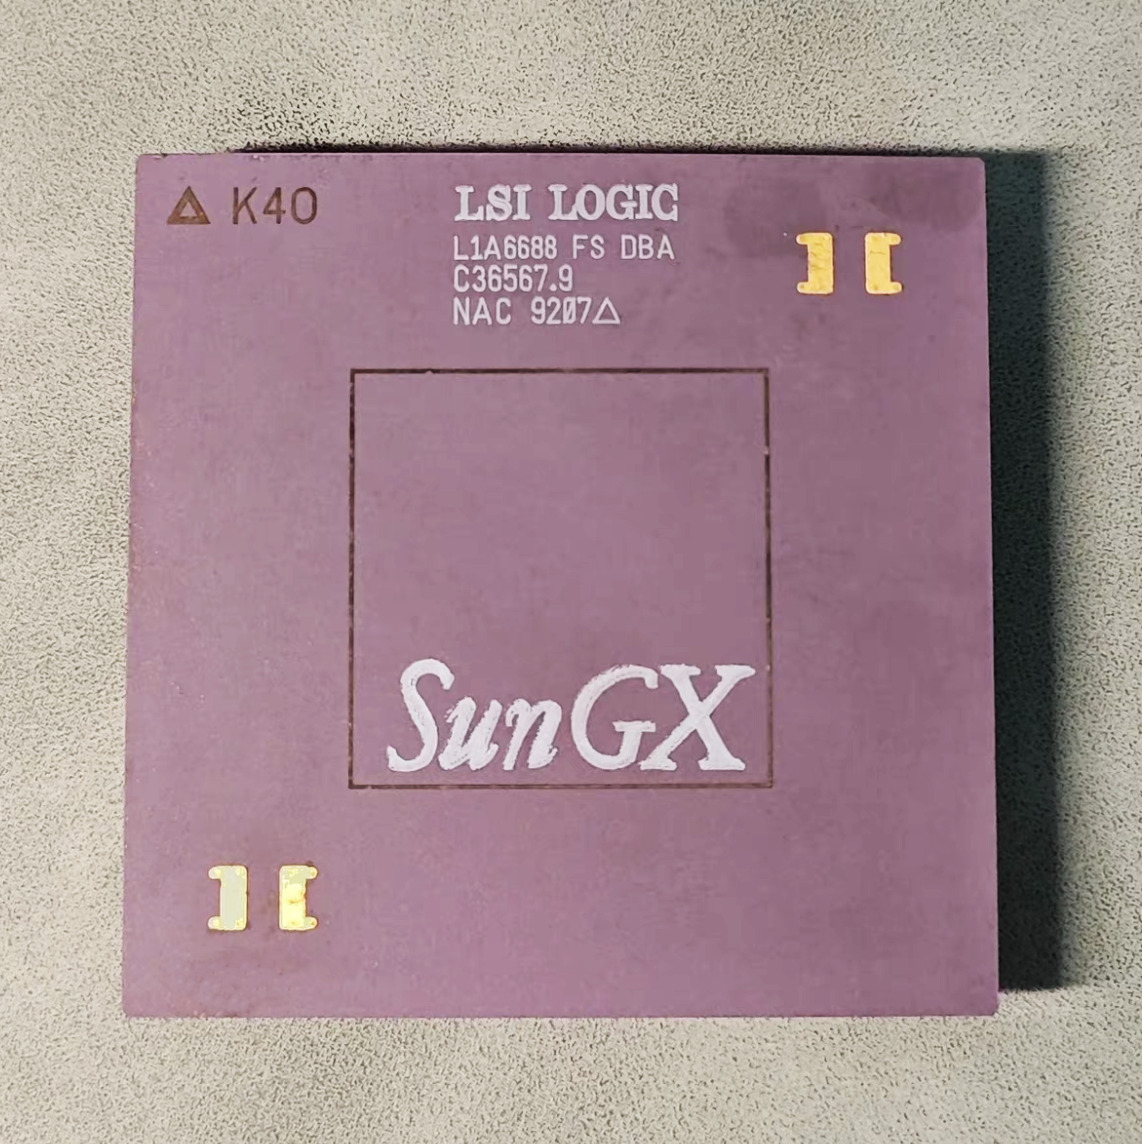 Sun GX ceramic old CPU chip, gold face, good pinout, high commemorative value.